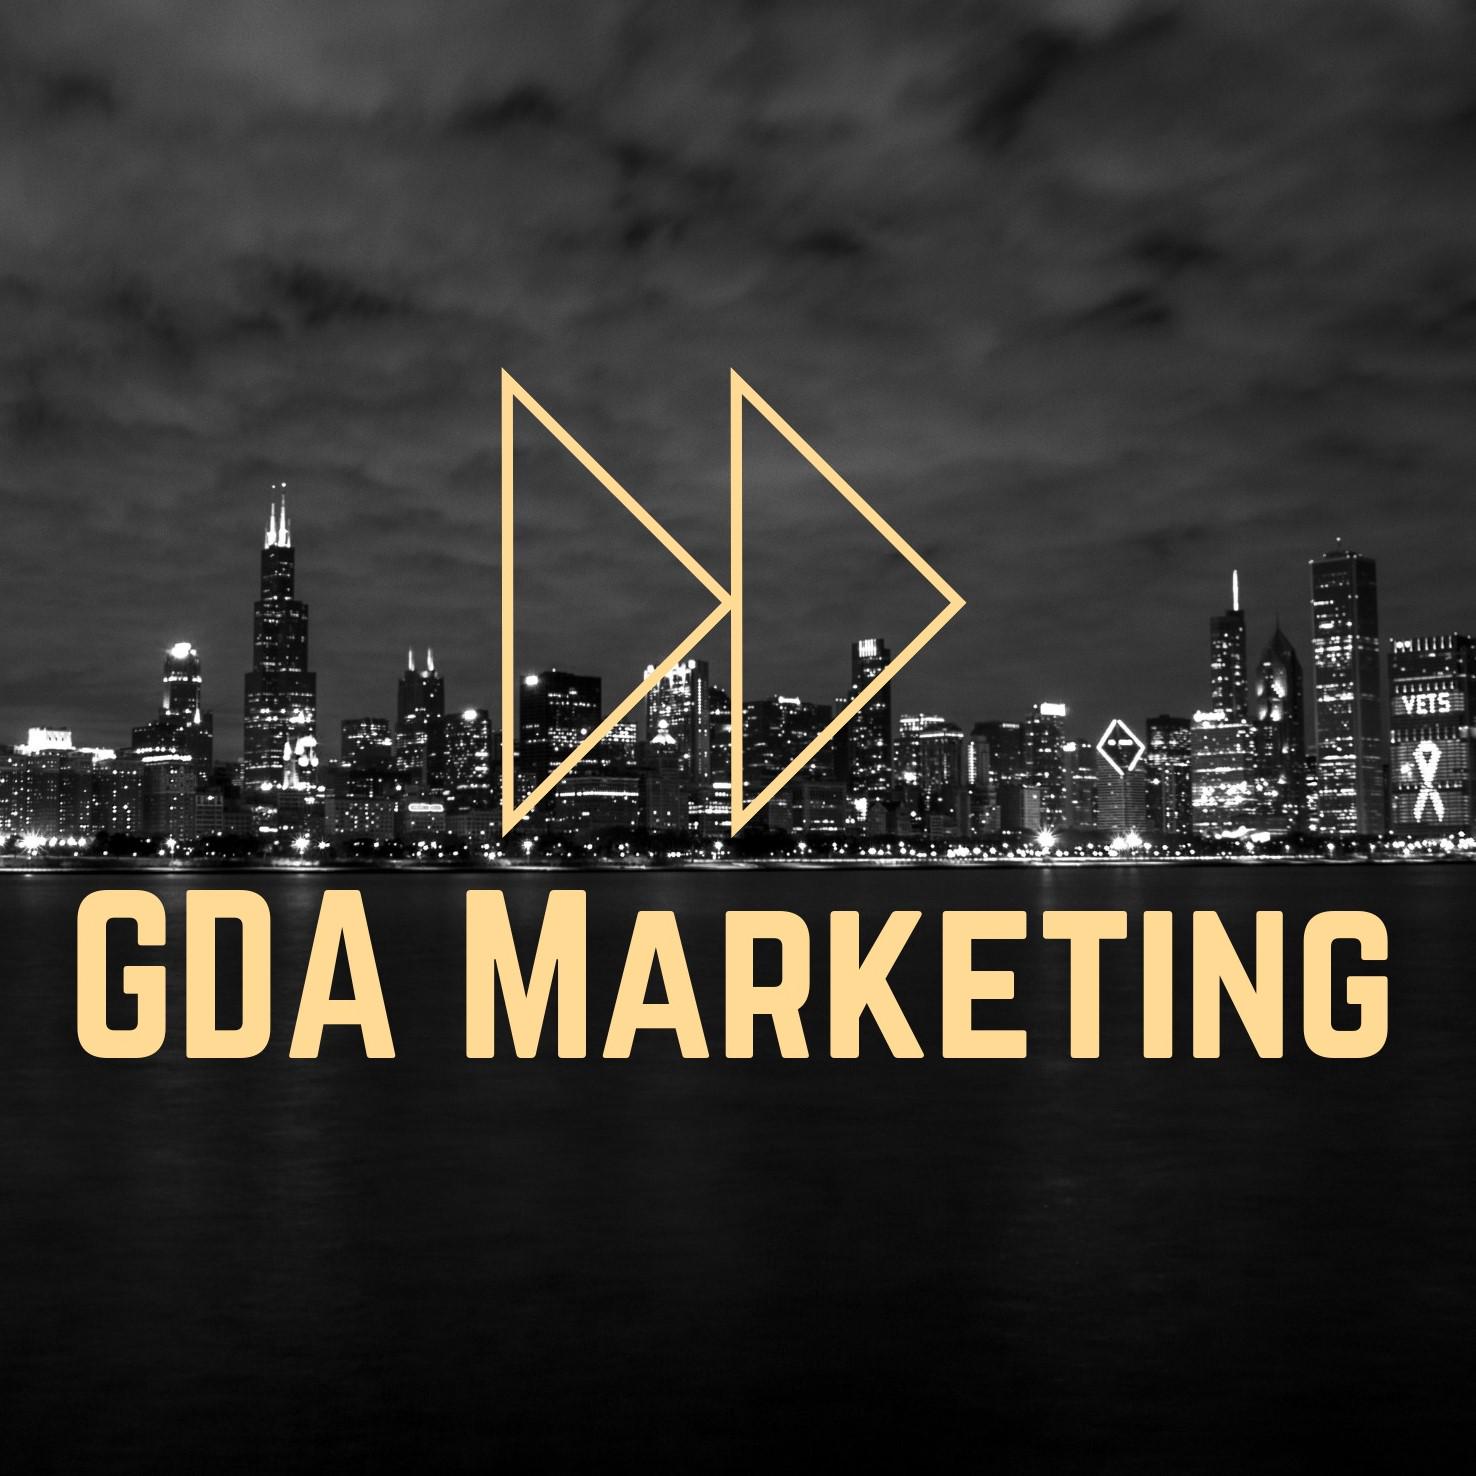 GDA Marketing Agency profile on Qualified.One